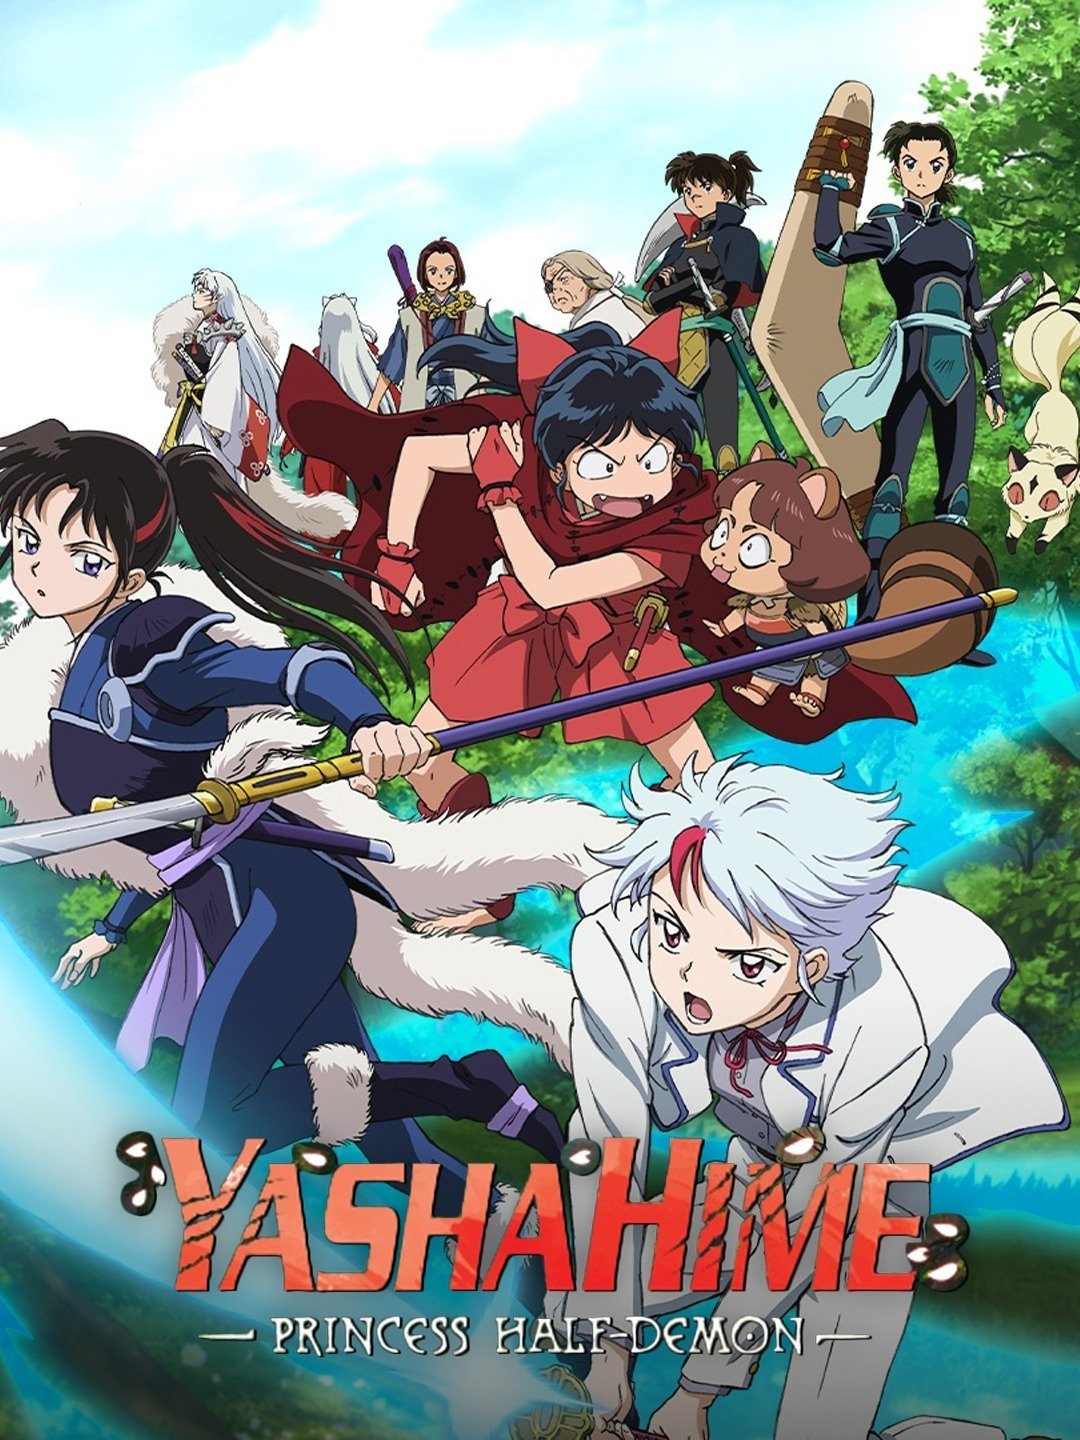 New Anime Alert: Yashahime Princess Half-Demon Episode 1!!! - YouTube